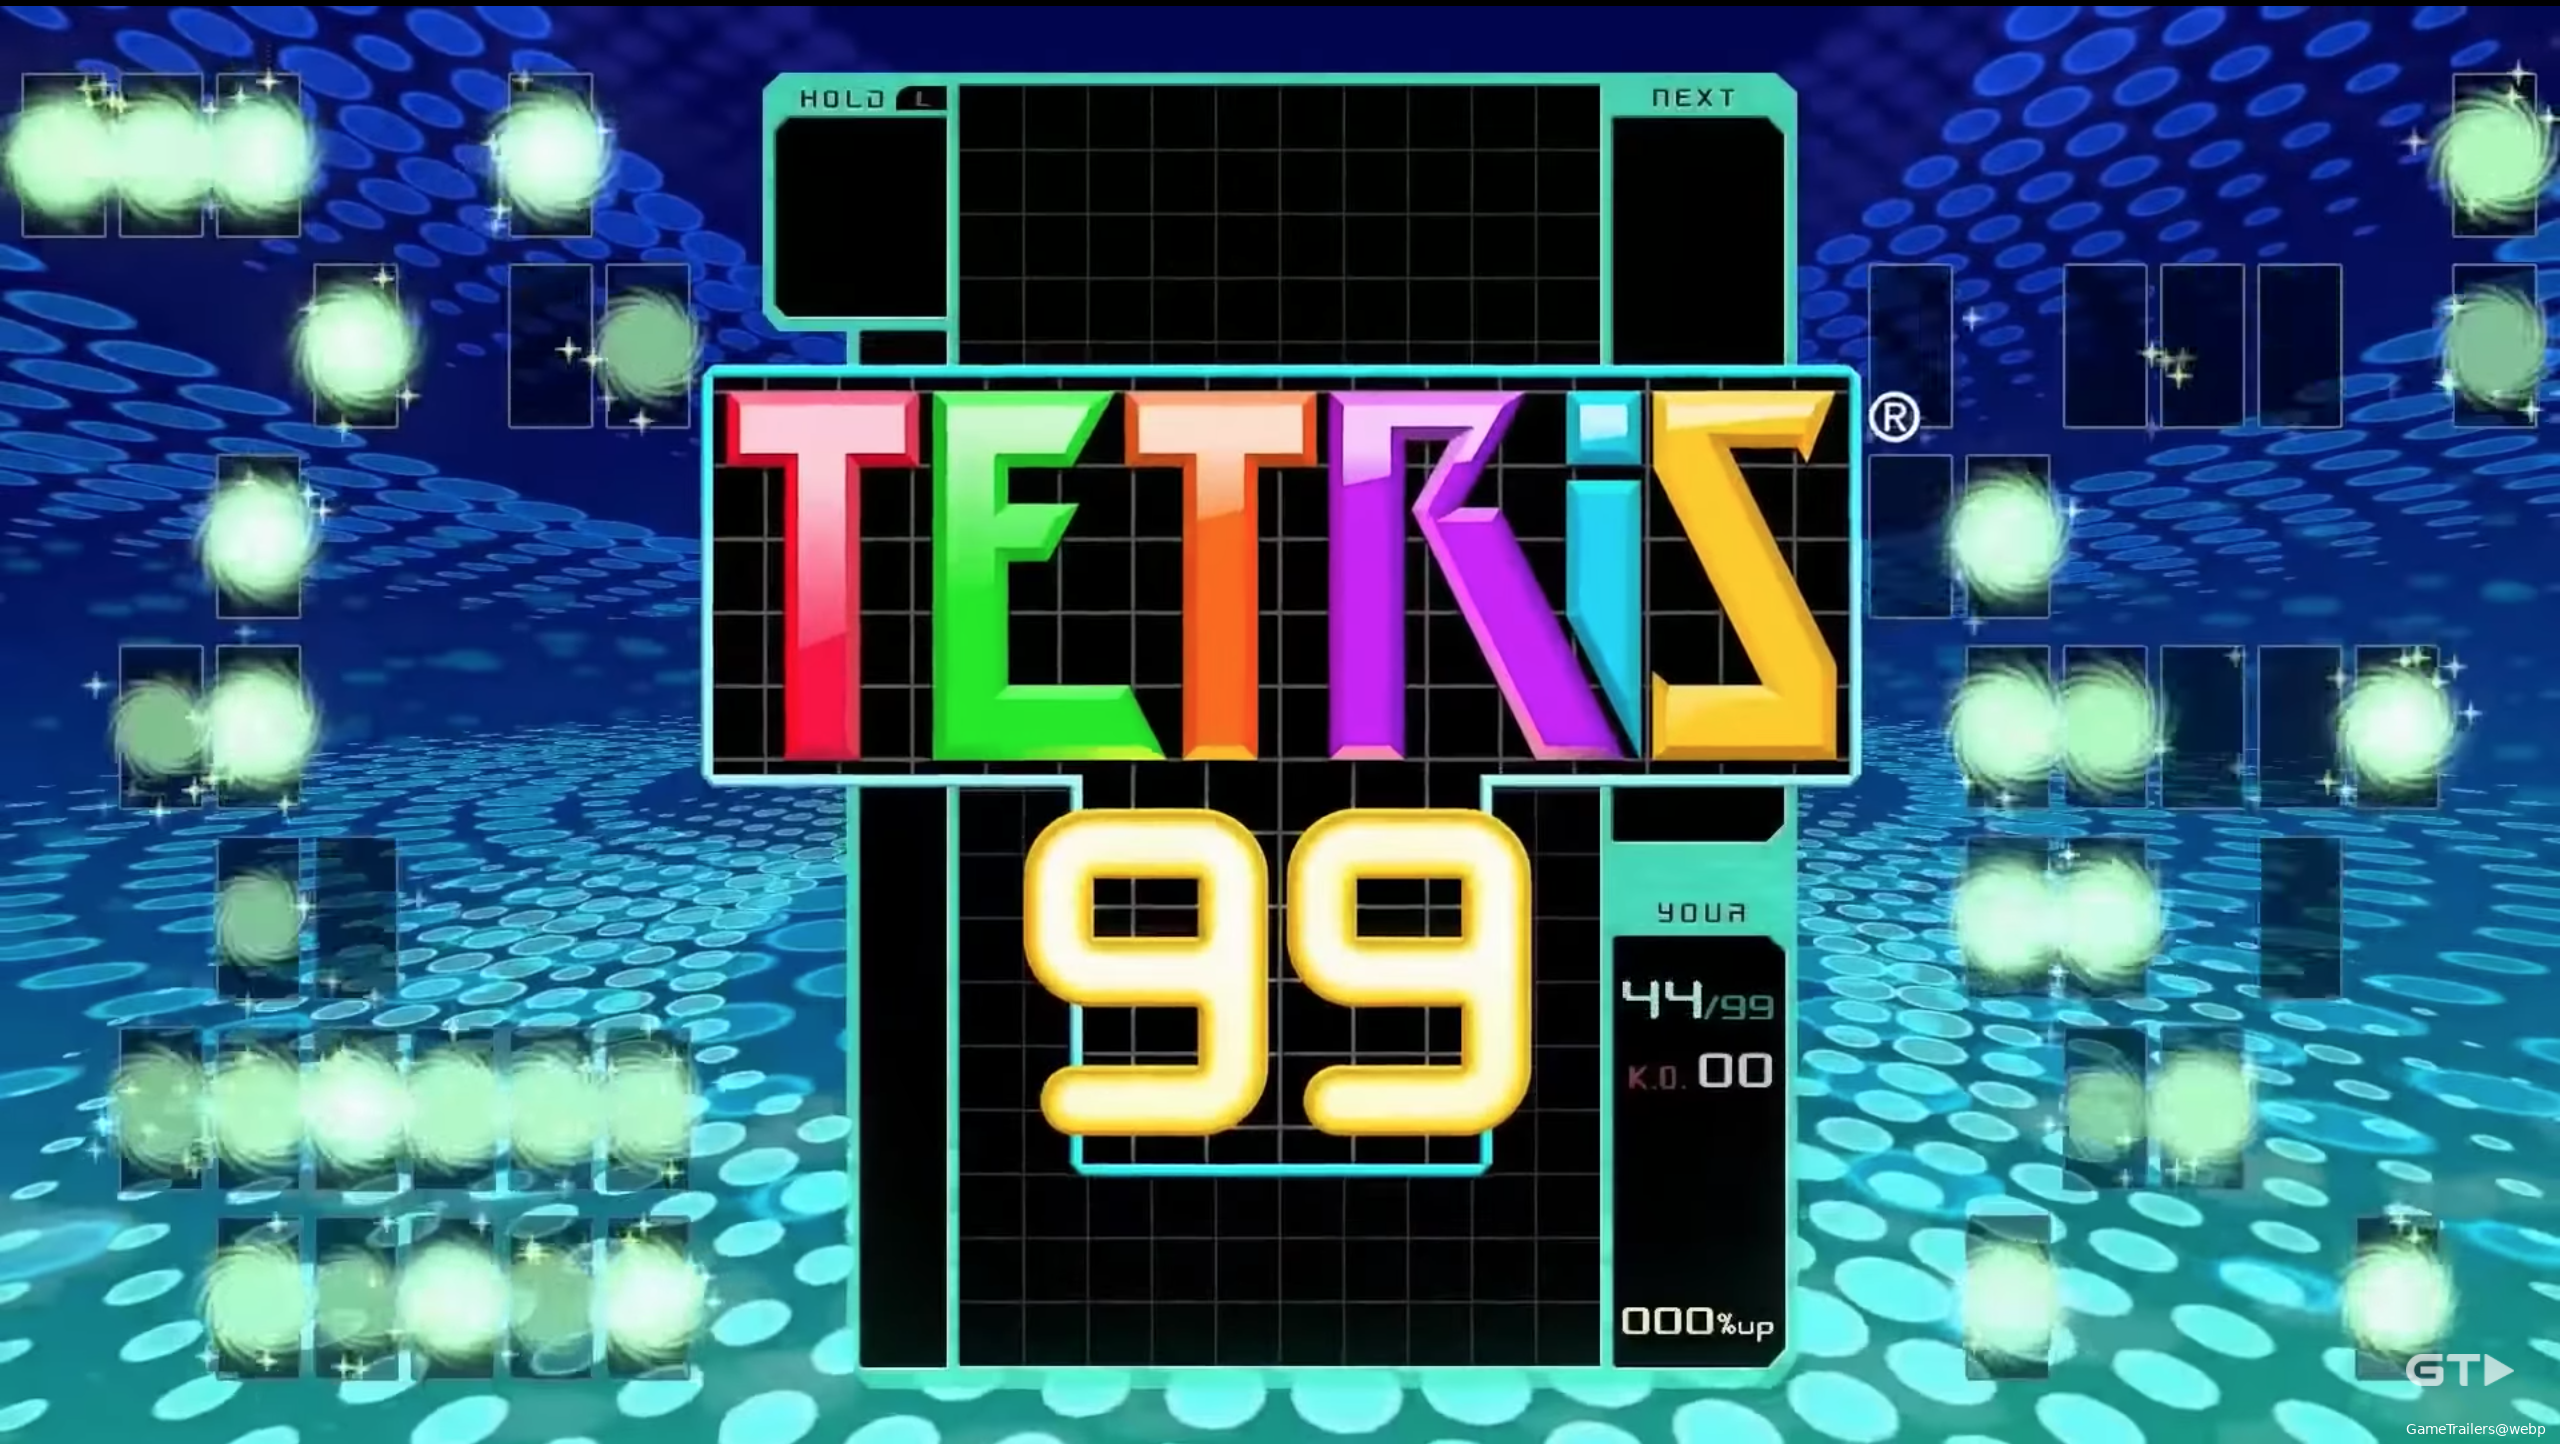 tetris 99 screenshotf1645621152